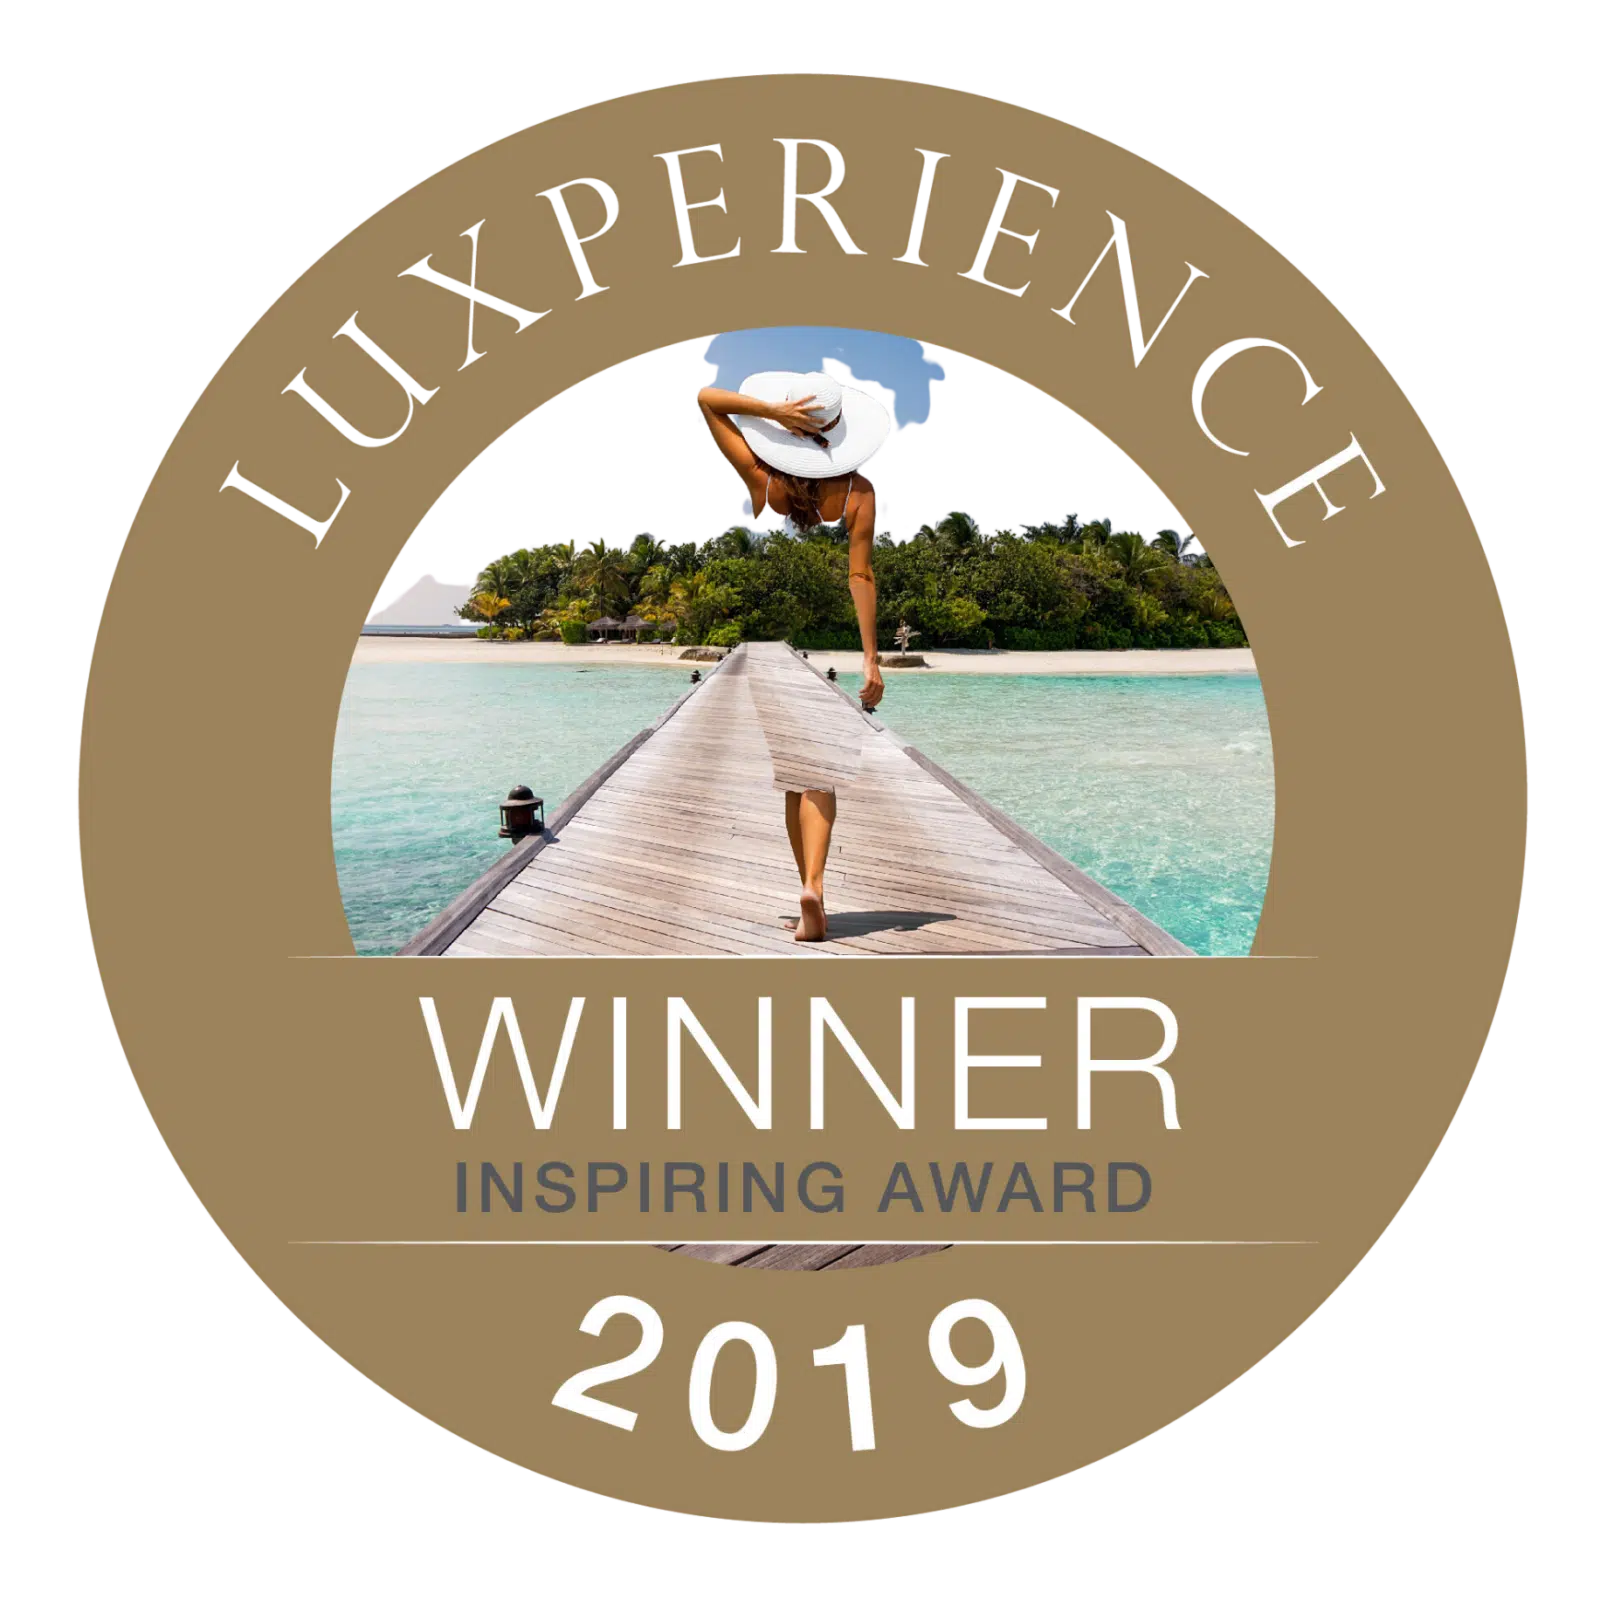 Luxperience 2019 winner badge